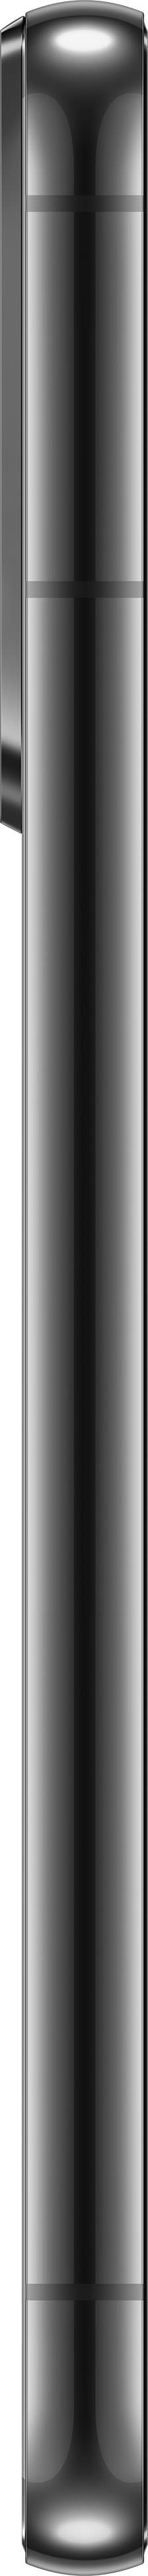 Samsung - Galaxy S22+ 128GB - Phantom Black (Verizon)_5